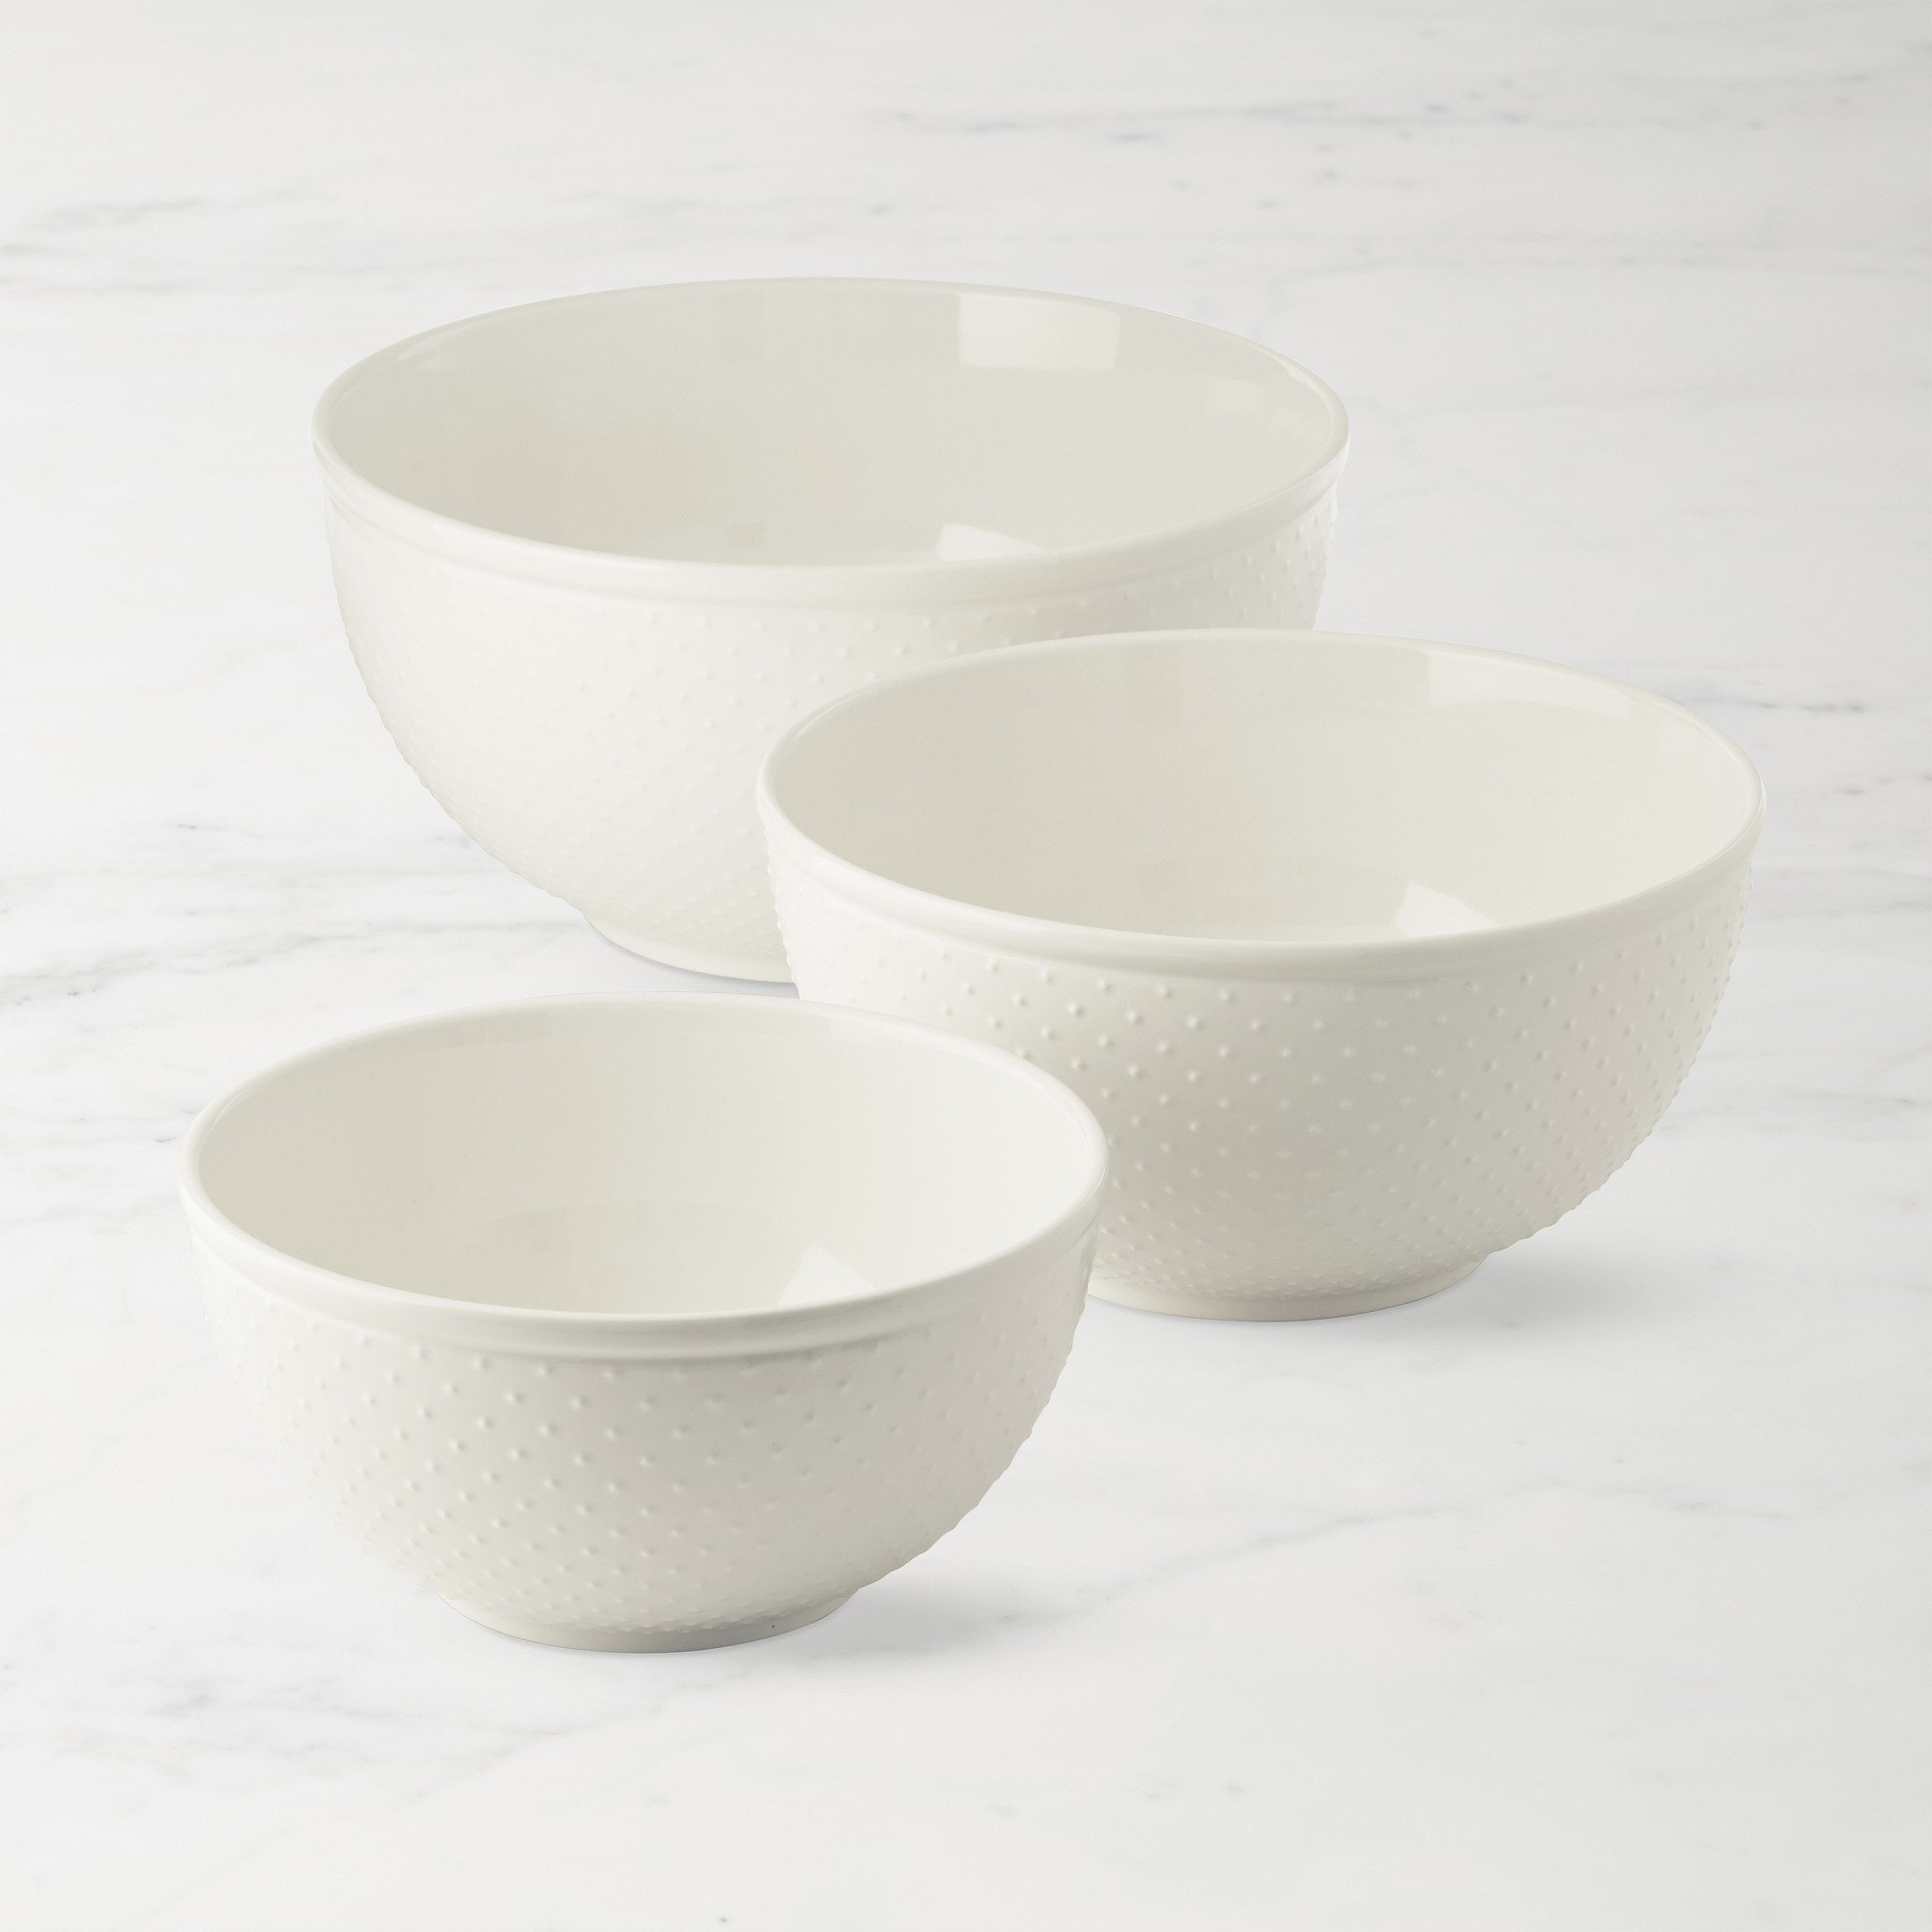 wedding registry ideas Swiss-dot ceramic bowls from Williams Sonoma